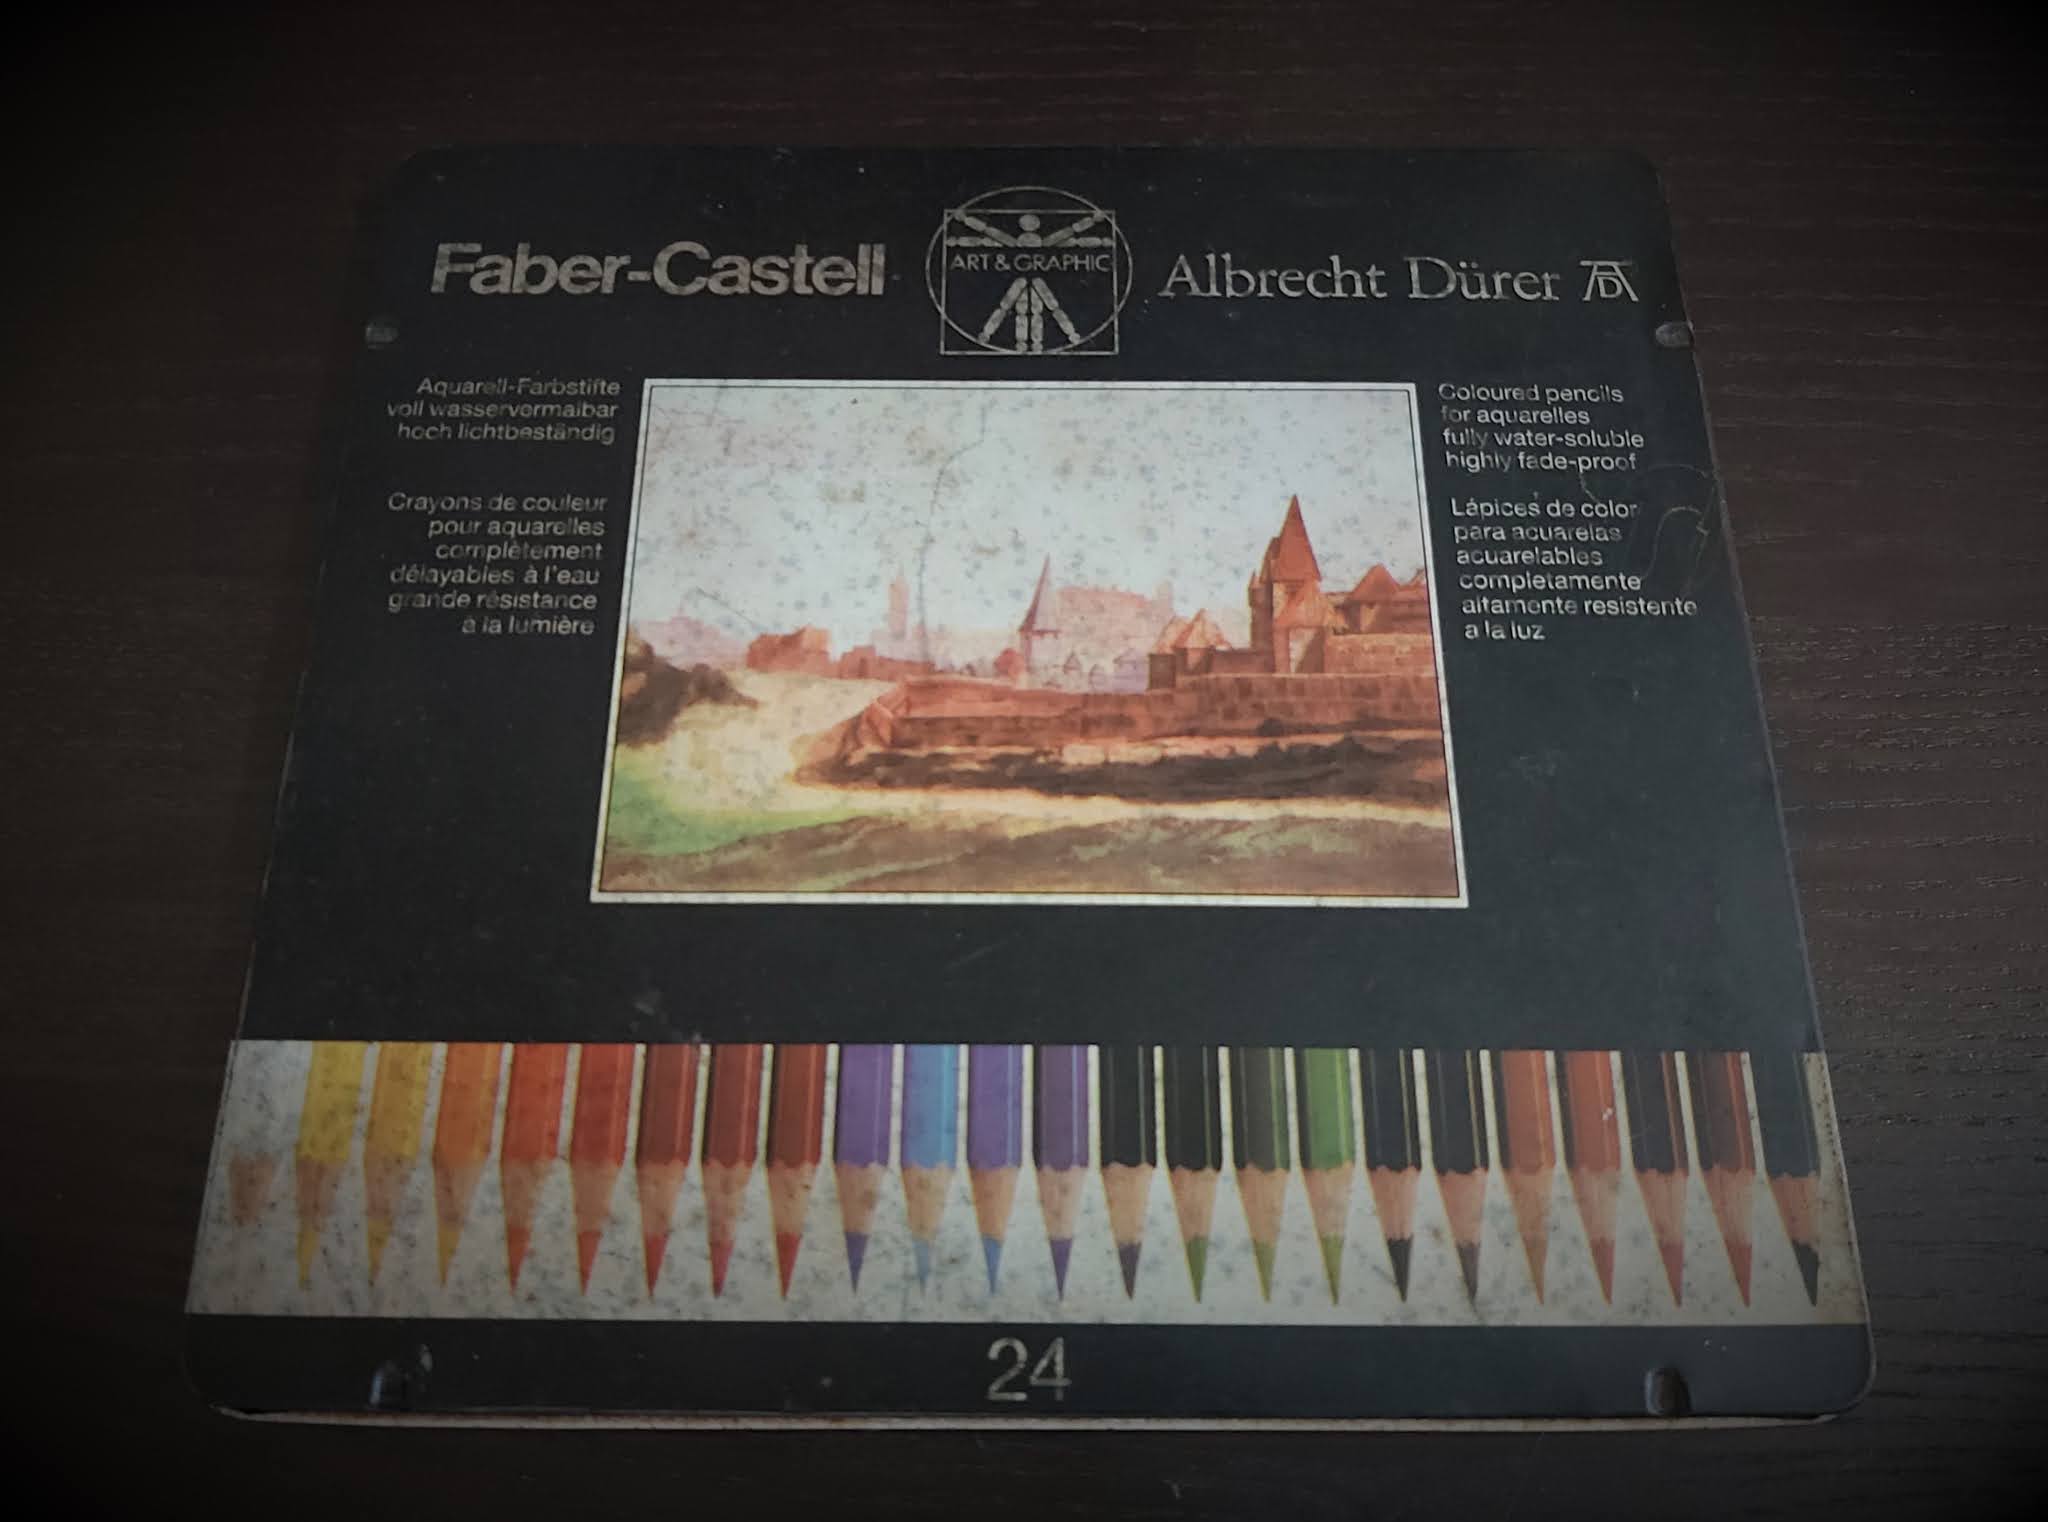 Albrecht Durer Watercolor Pencil Sets